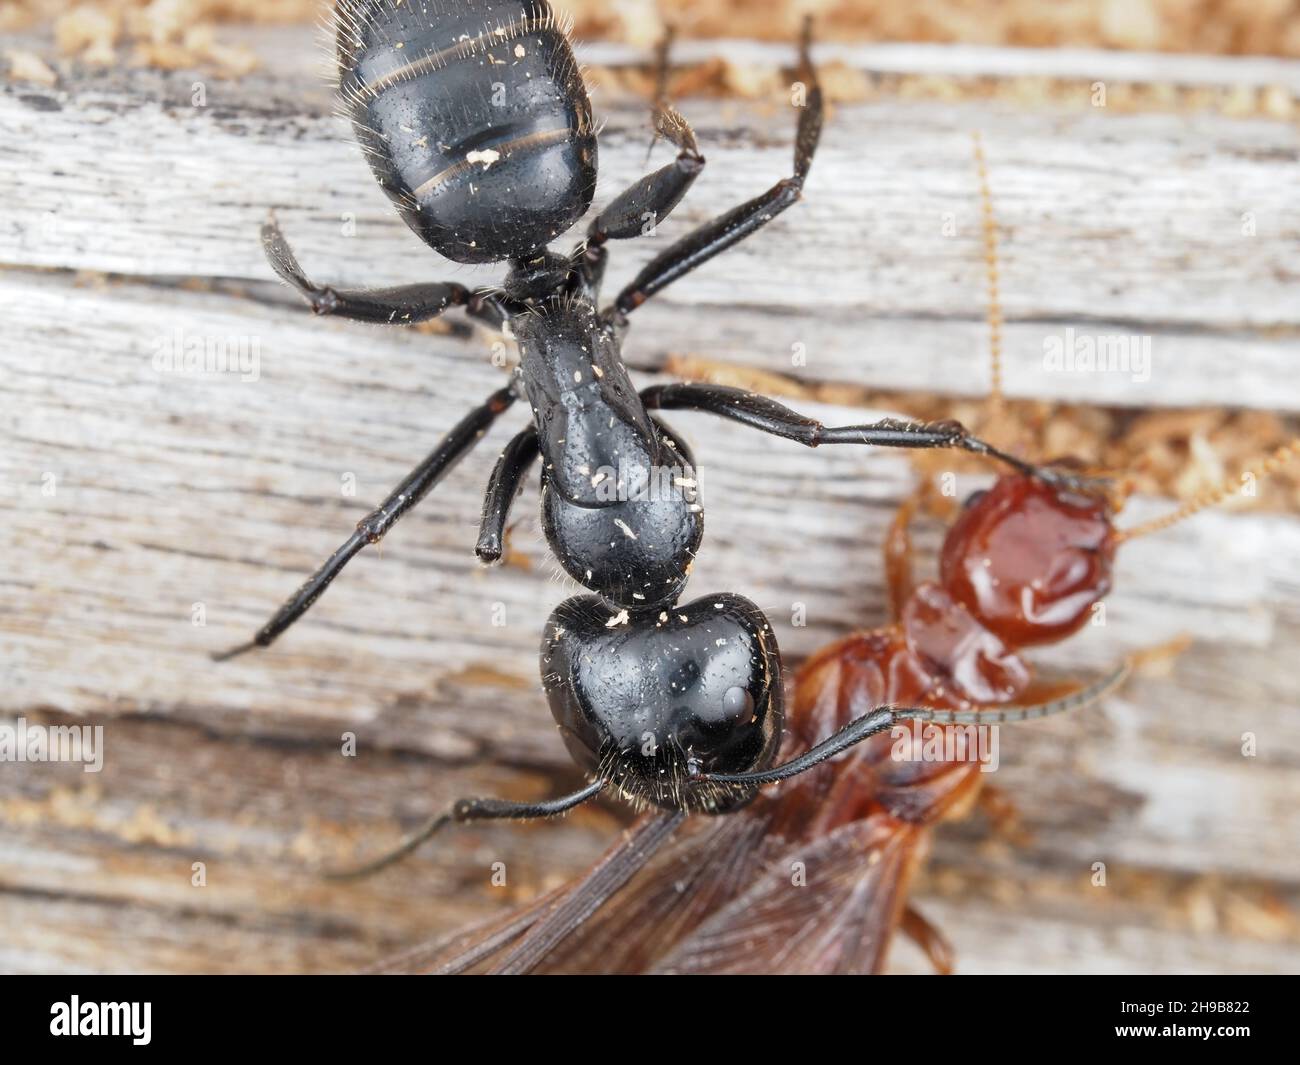 Carpenter ant fighting a dampwood termite Stock Photo